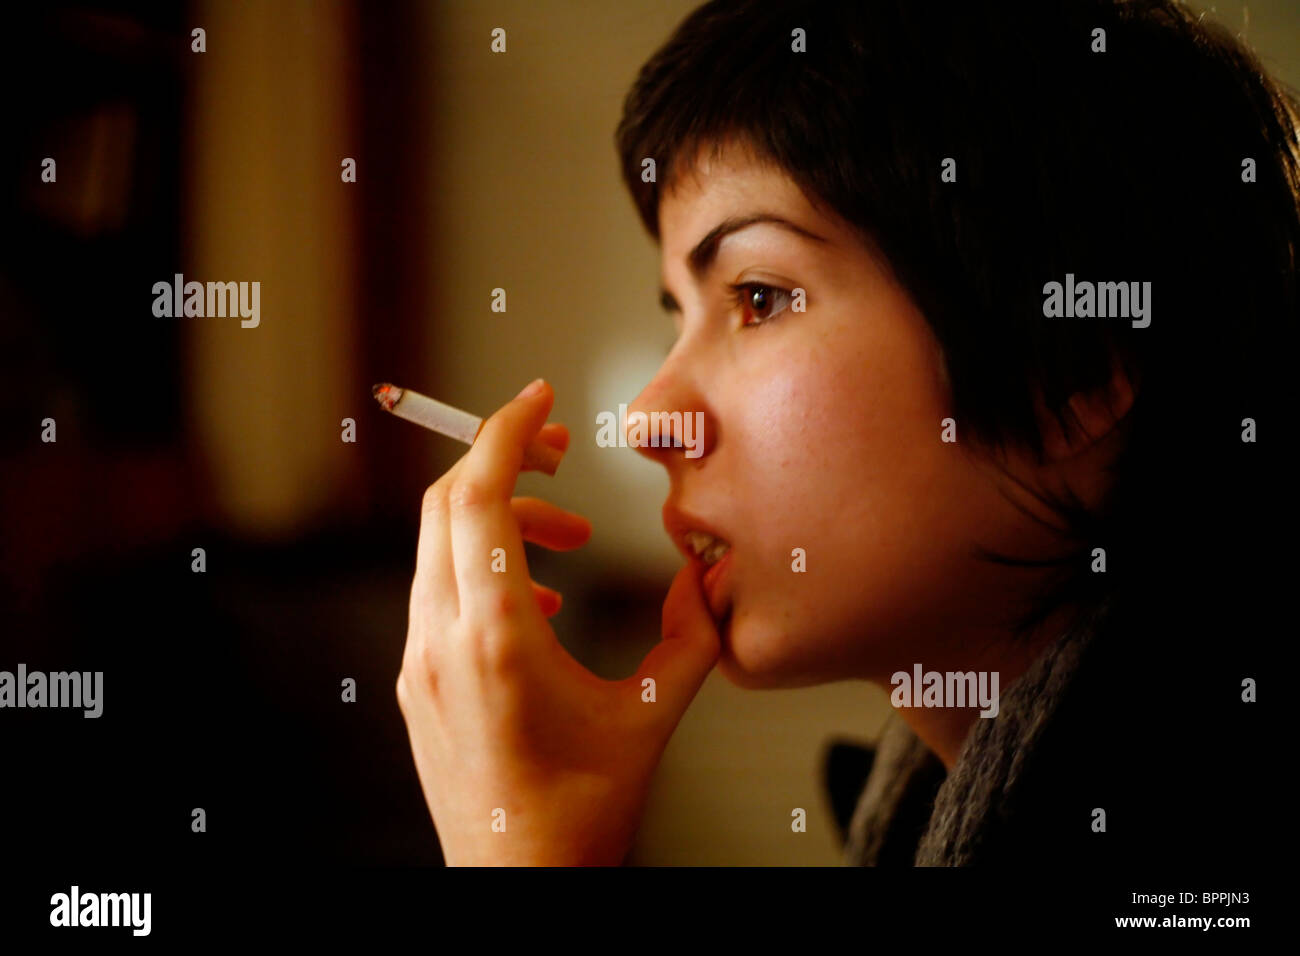 A woman smoking and thinking Stock Photo